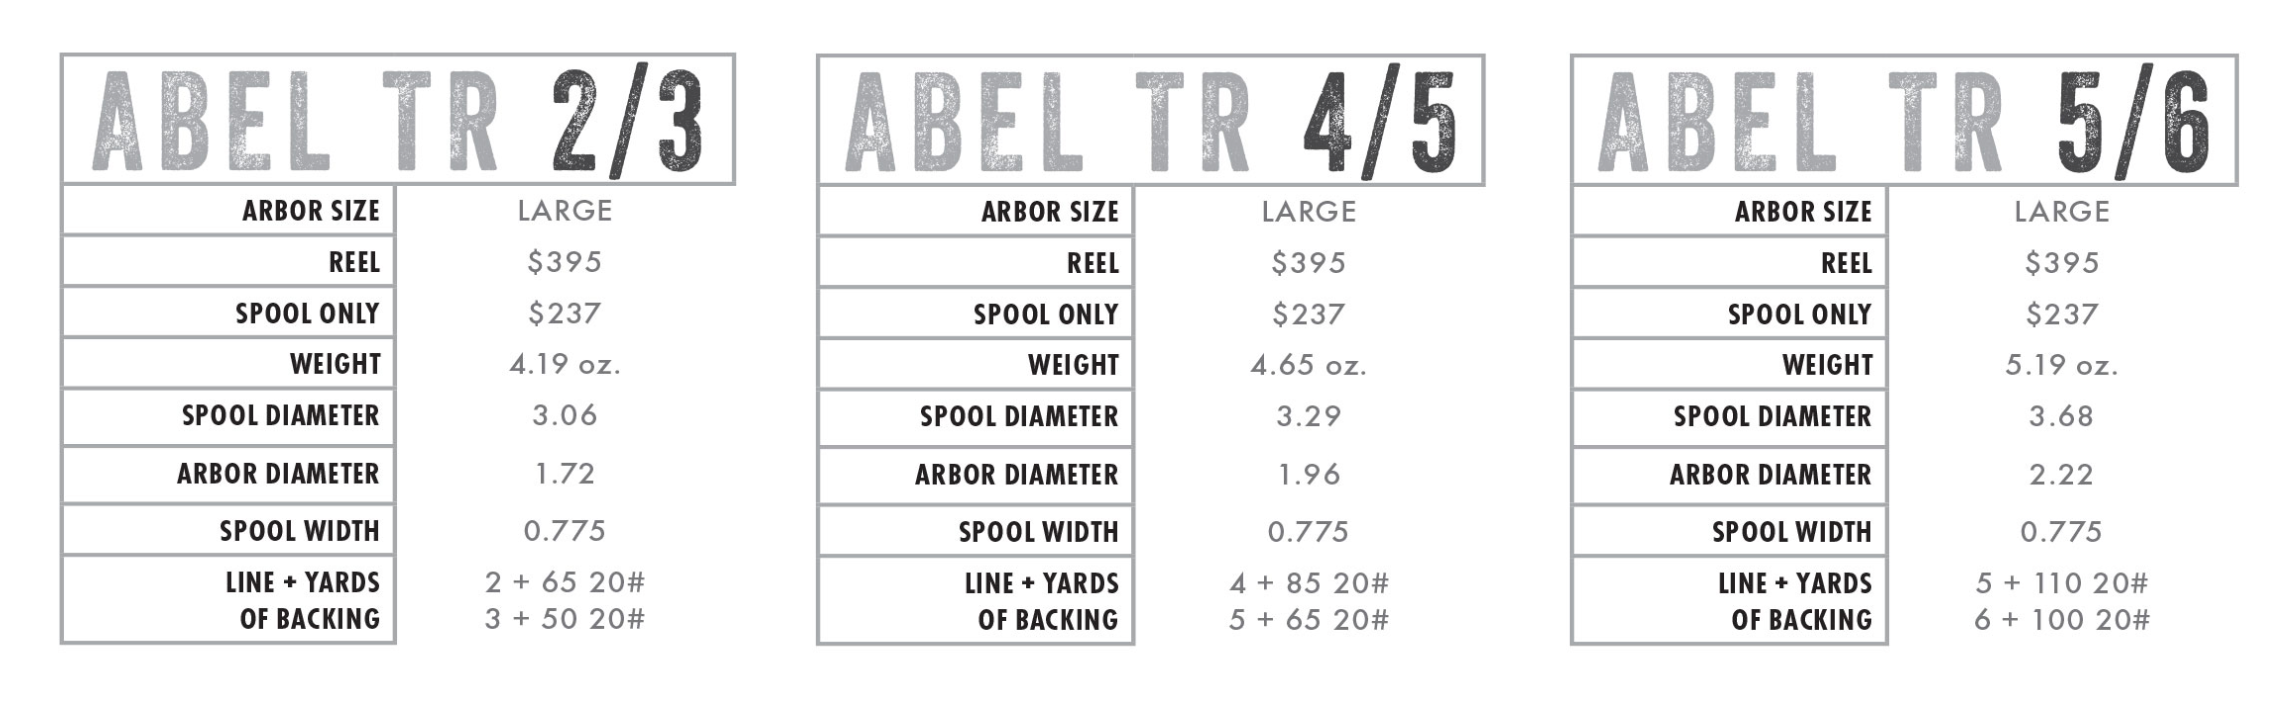 Abel TR Light Reel